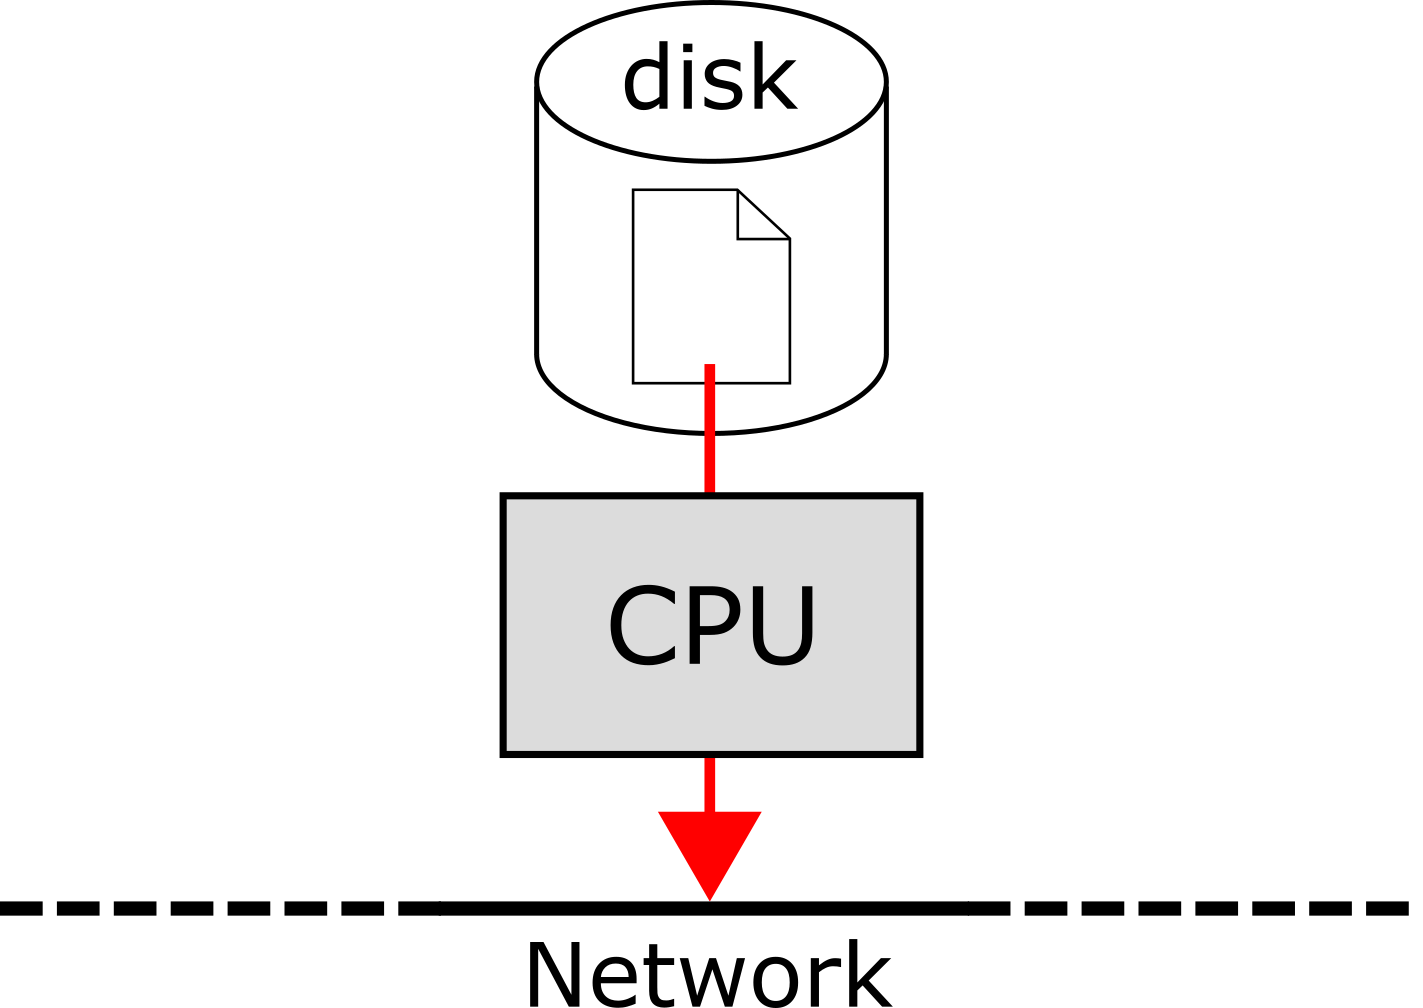 One CPU handling file transfer.